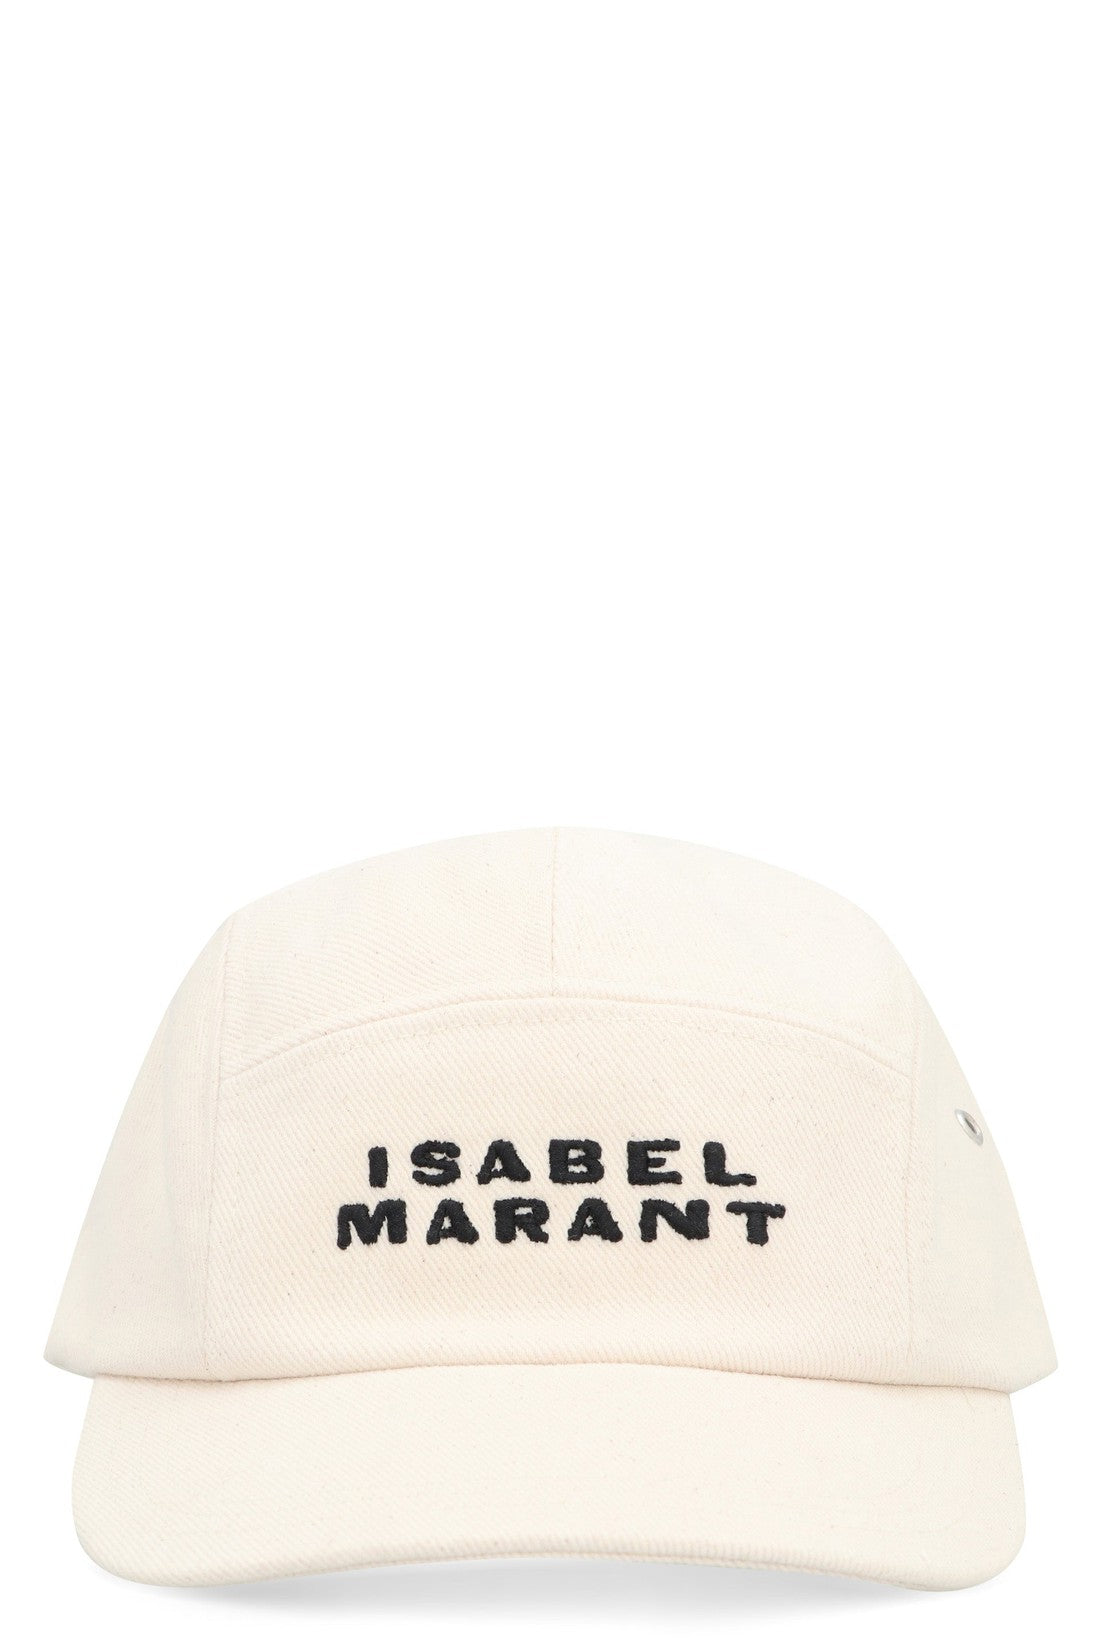 Isabel Marant-OUTLET-SALE-Logo baseball cap-ARCHIVIST